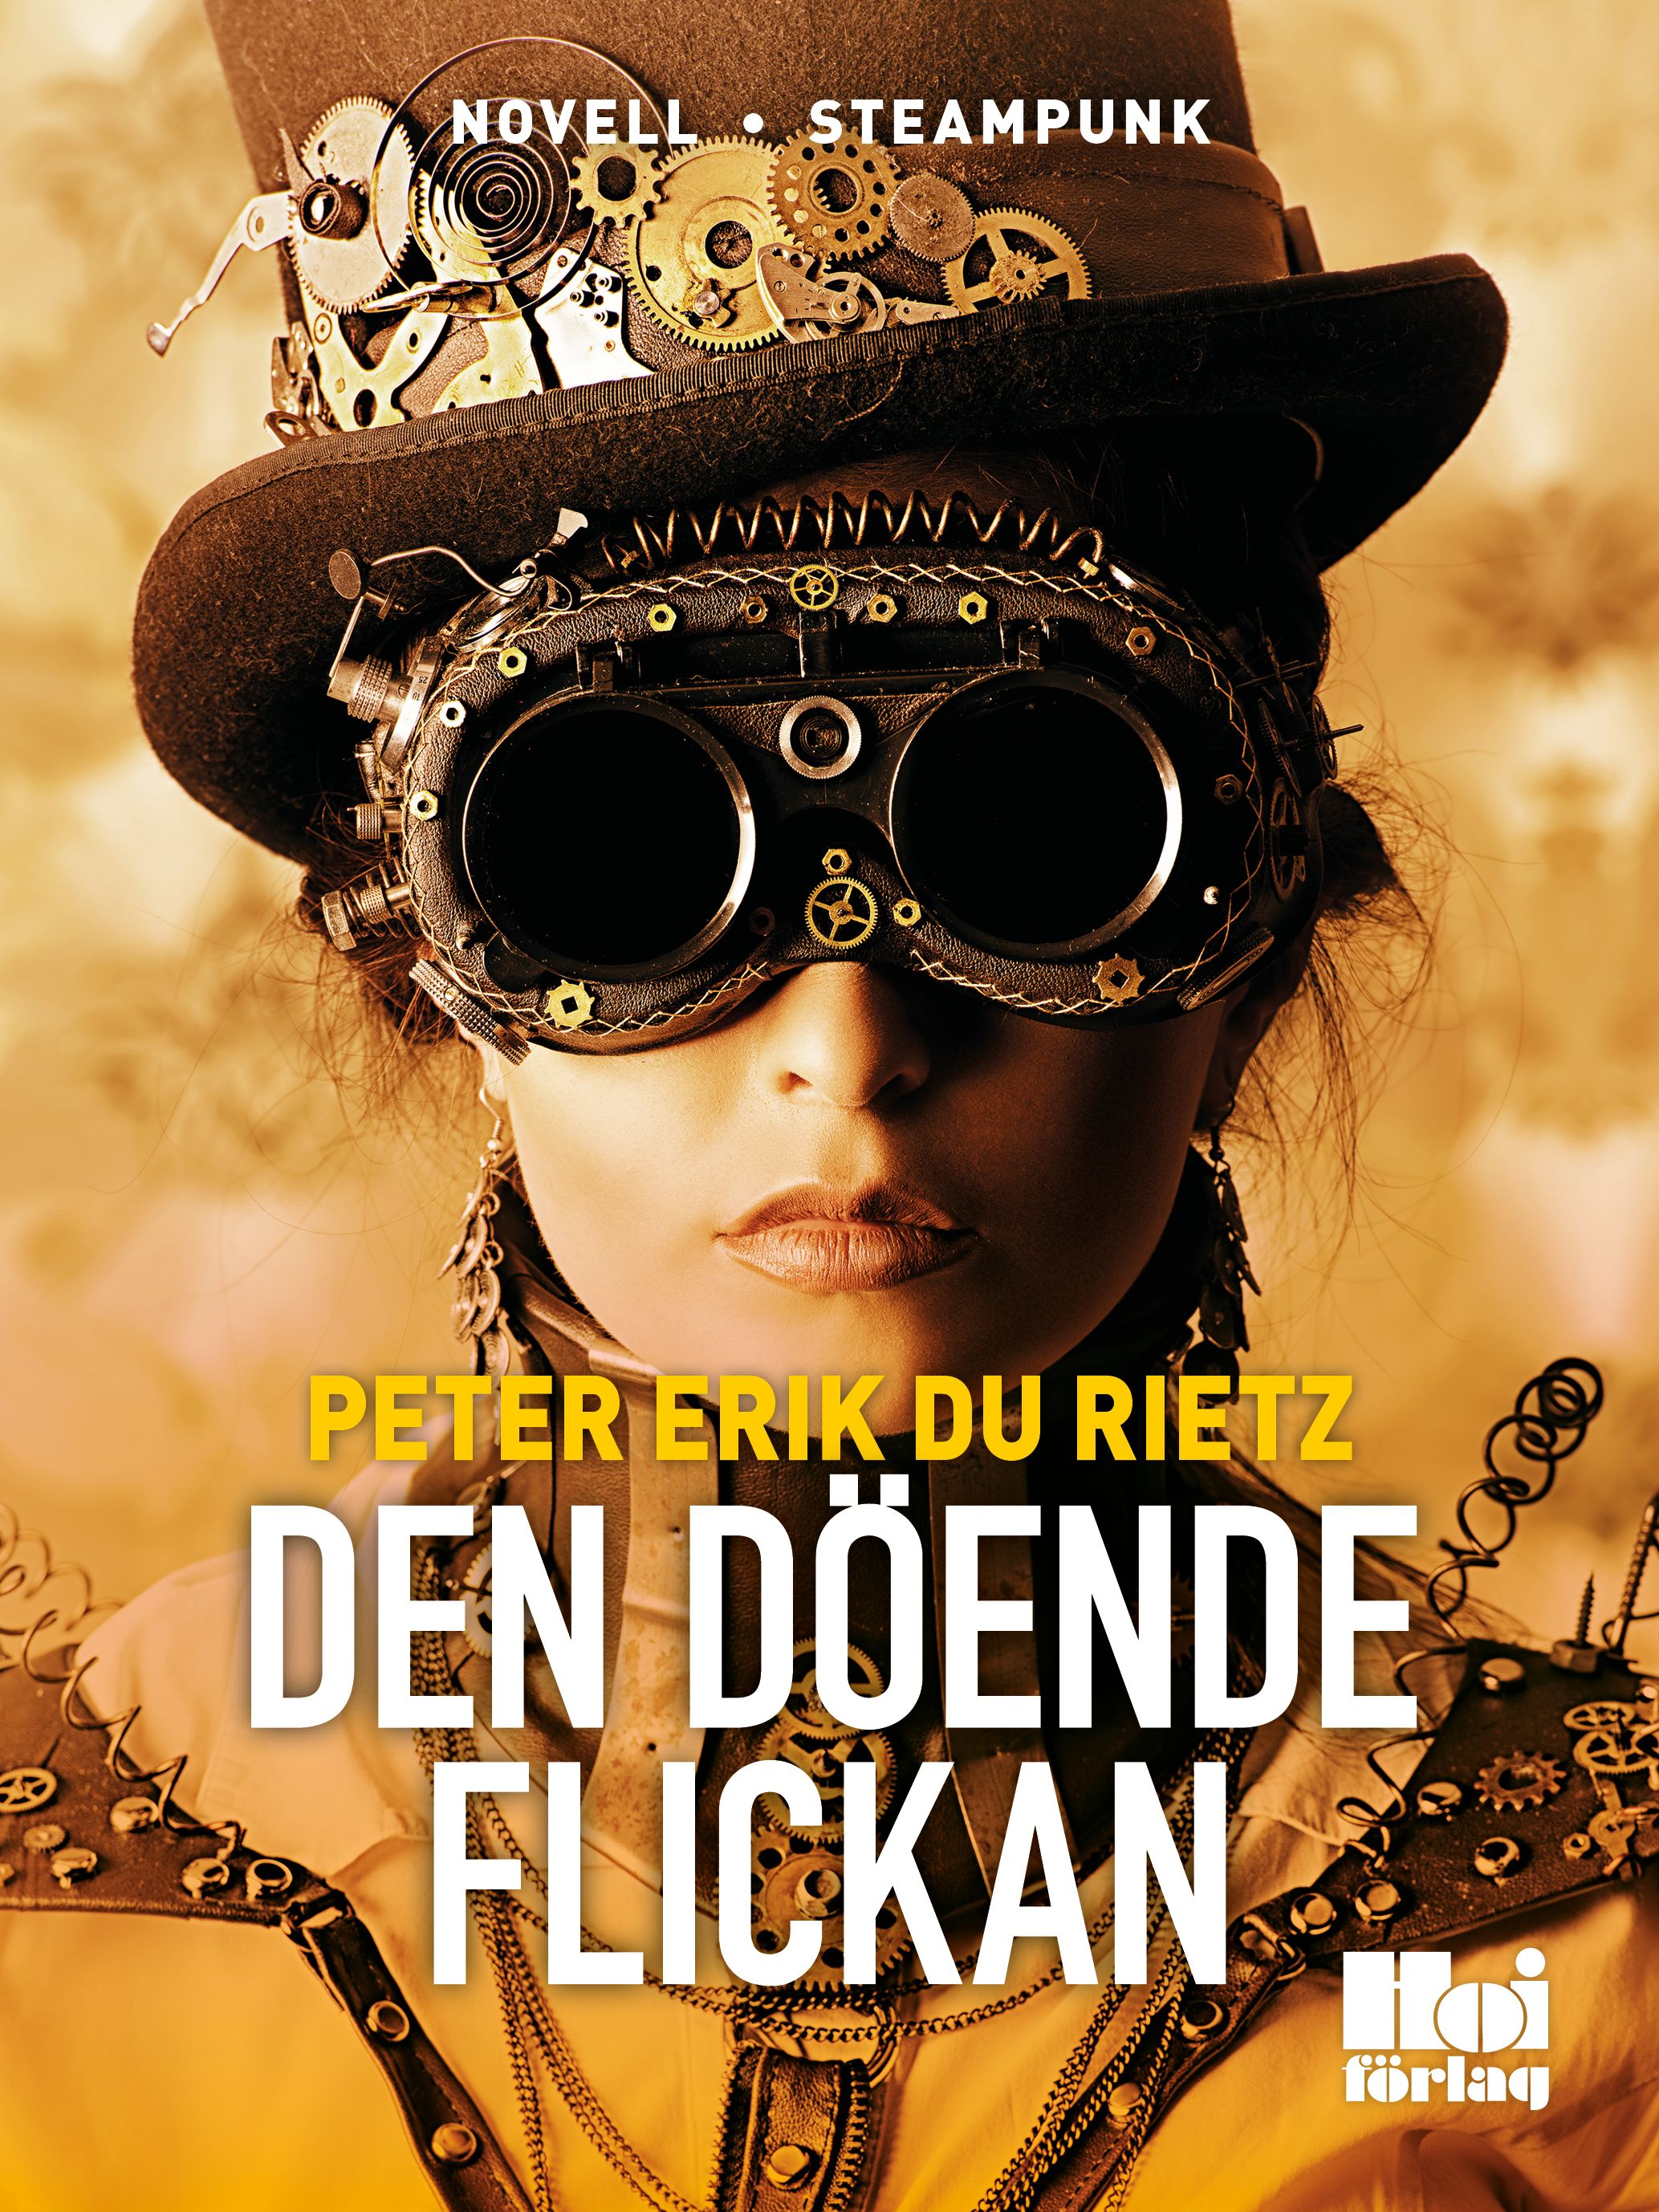 Den döende flickan, eBook by Peter Erik Du Rietz